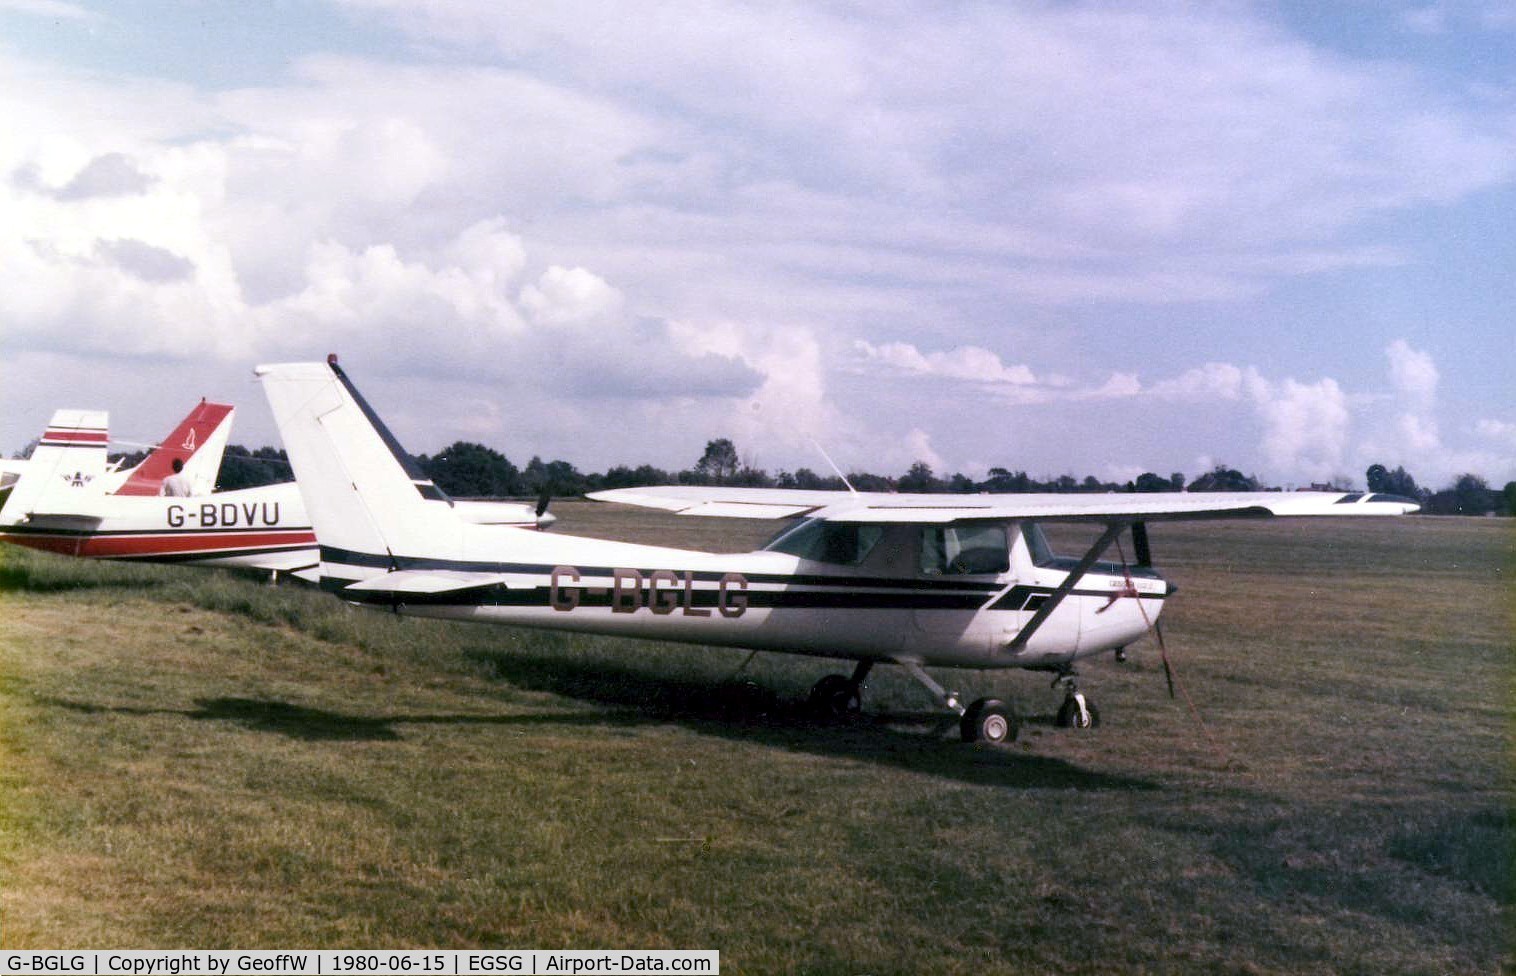 G-BGLG, 1978 Cessna 152 C/N 152-82092, Cessna 152 G-BGLG at Stapleford